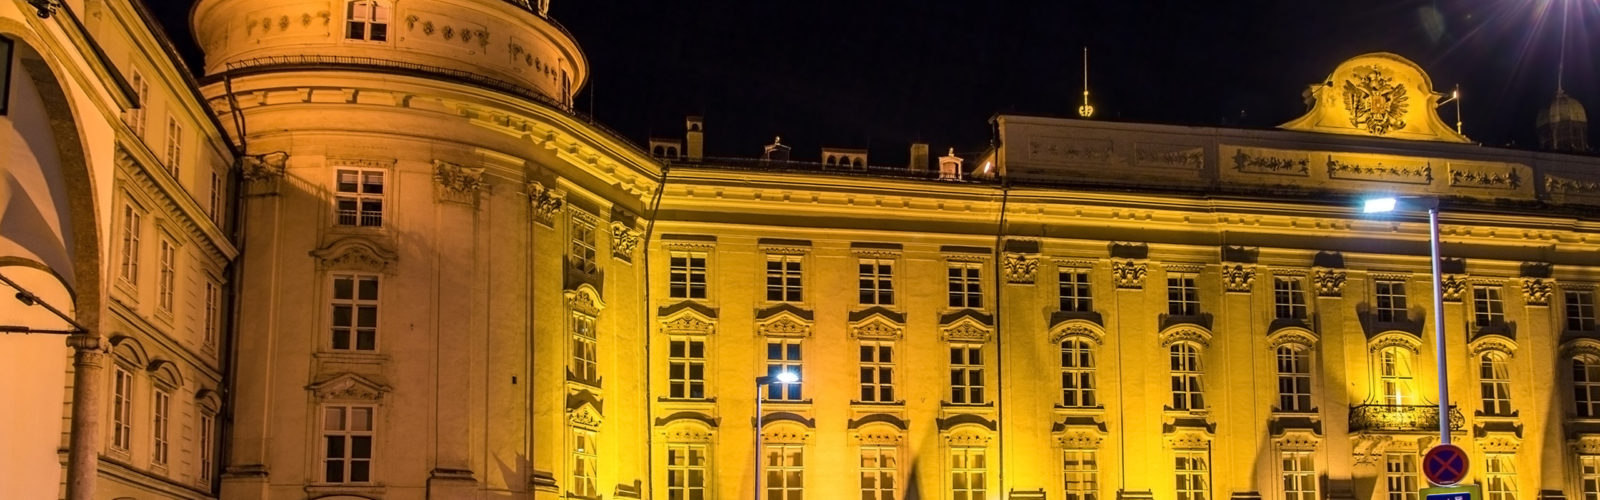 hofburg-palace-habsburg-empire-innsbruck-austria